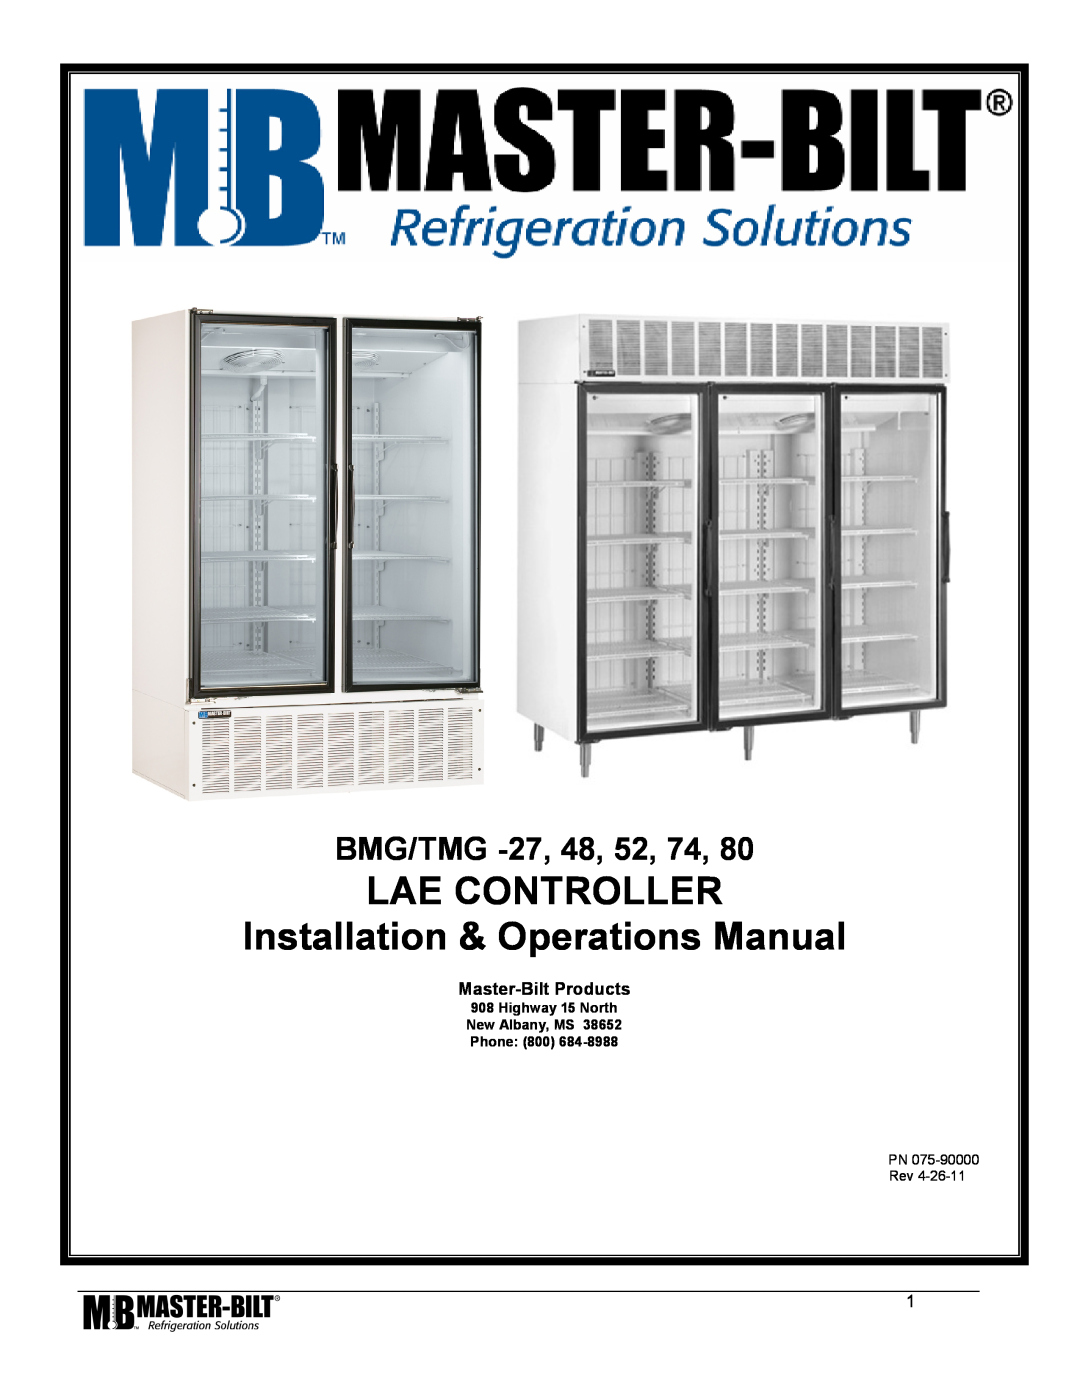 Master Bilt 80, BMG/TMG 27, 74, 52 manual LAE CONTROLLER Installation & Operations Manual, BMG/TMG -27,48, PN Rev 